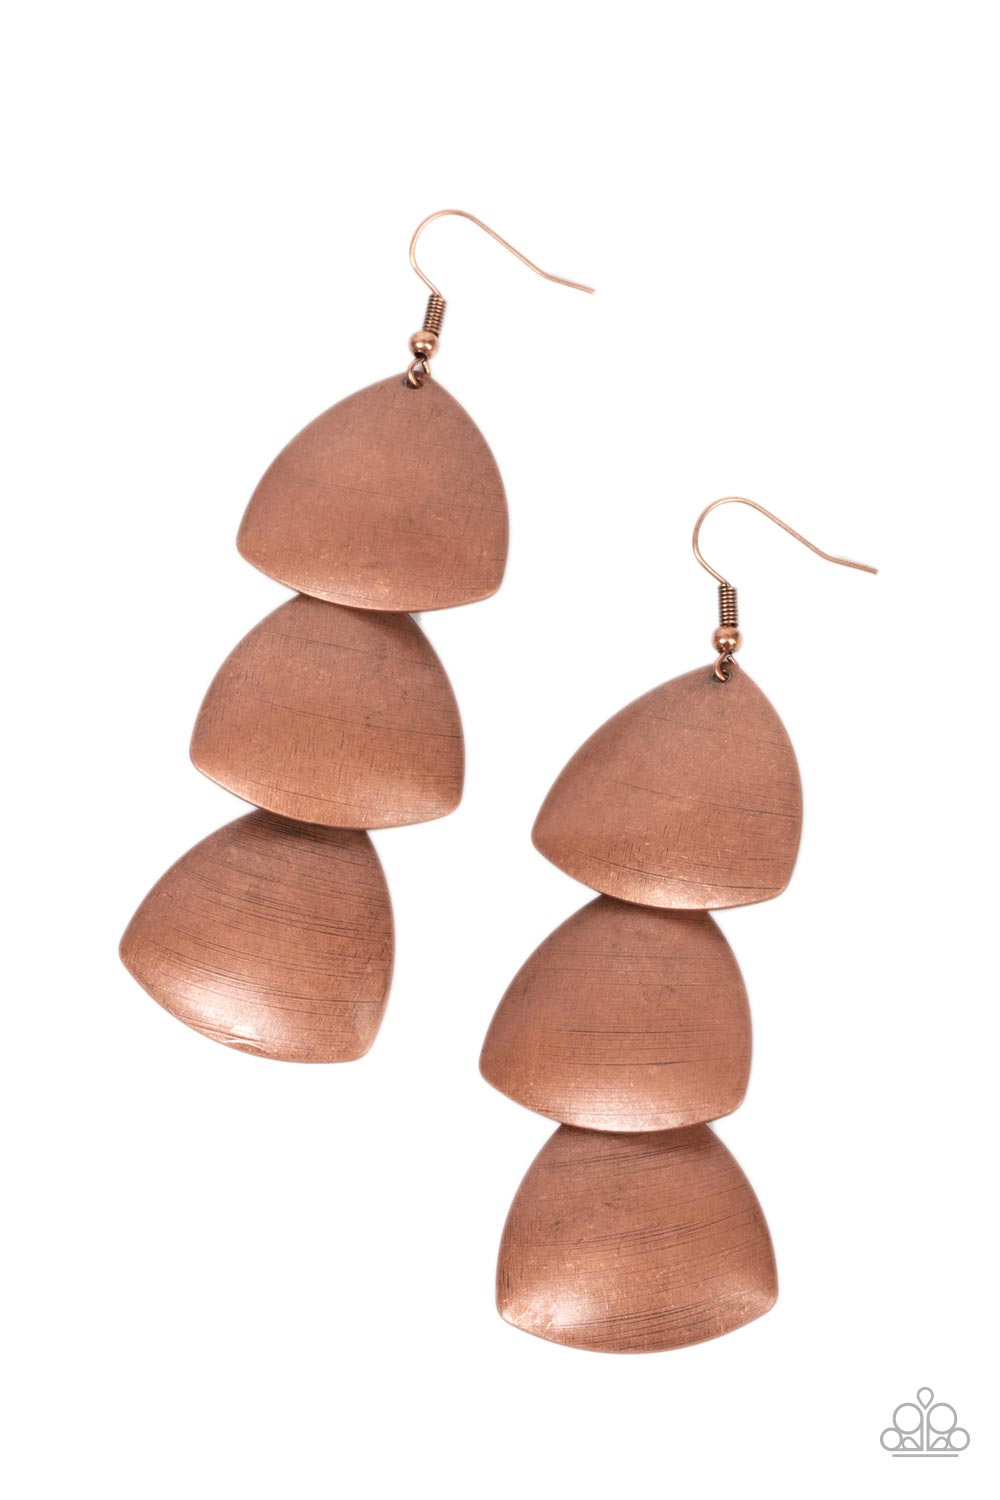 Modishly Metallic Copper Earrings- lightbox - CarasShop.com - $5 Jewelry by Cara Jewels